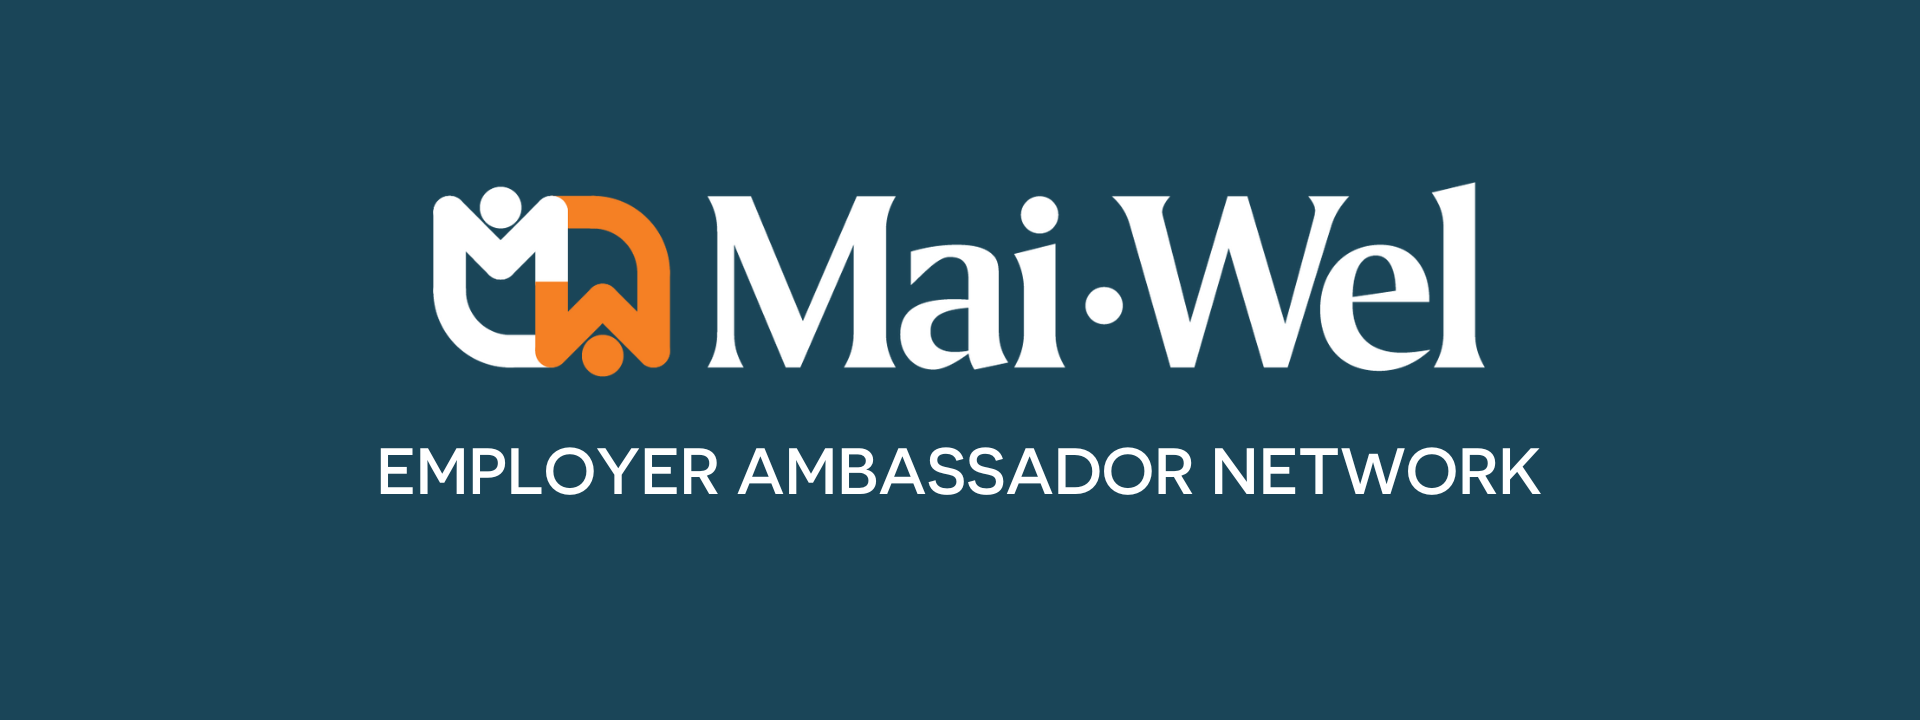 Employer Ambassador Network